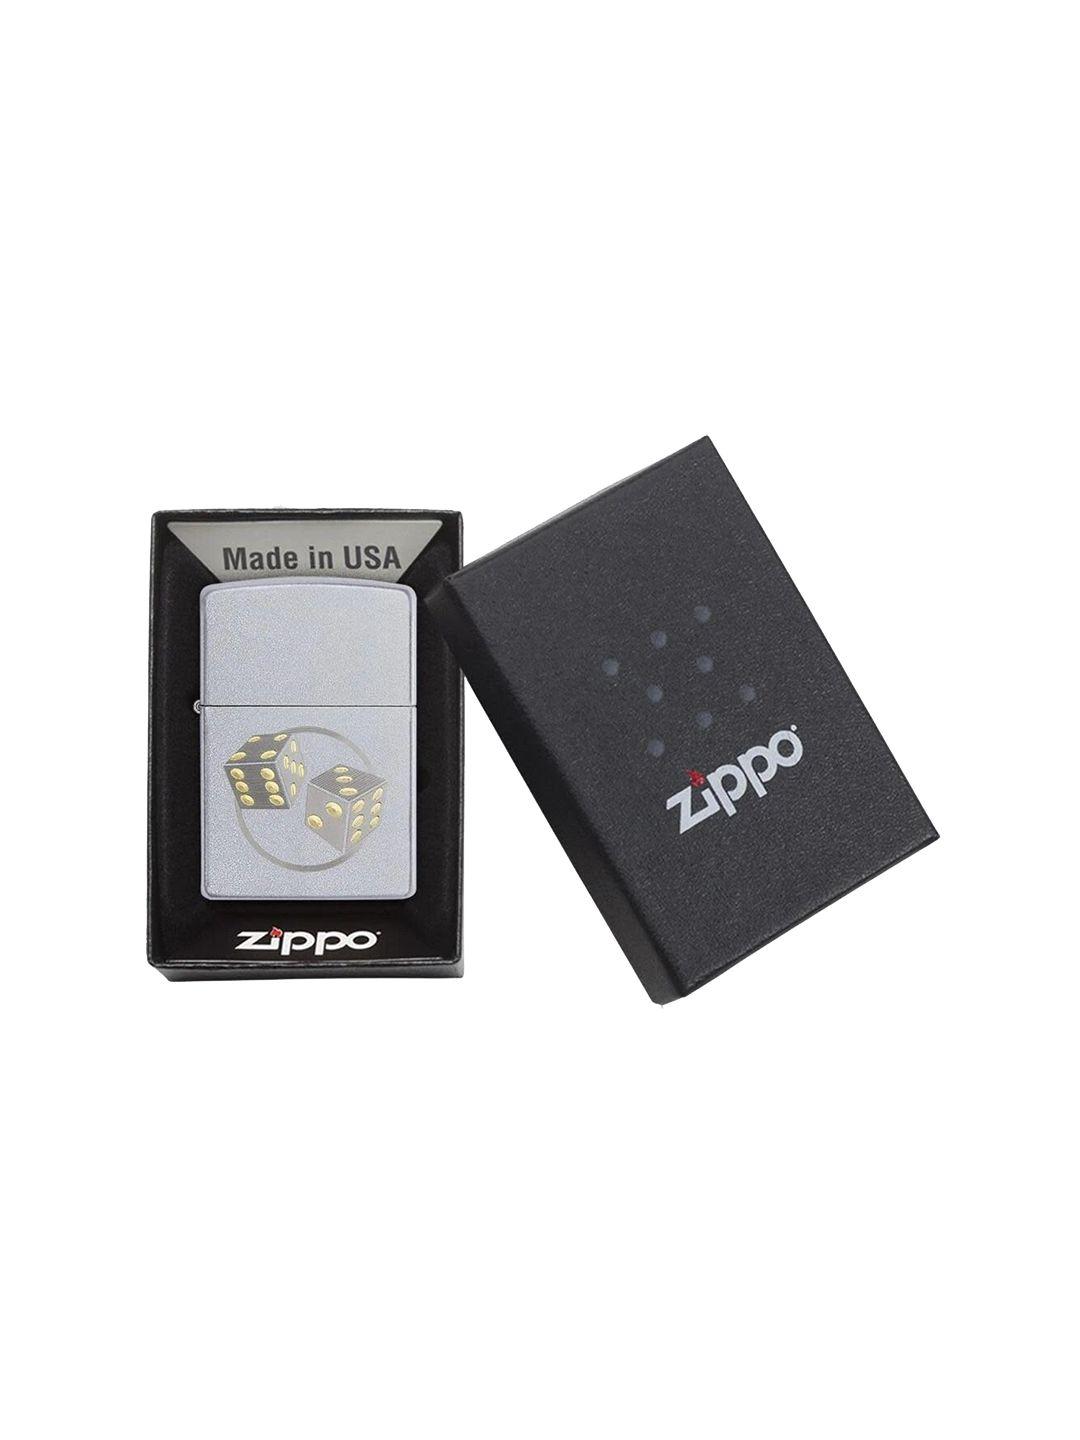 zippo silver-toned dice pocket lighter